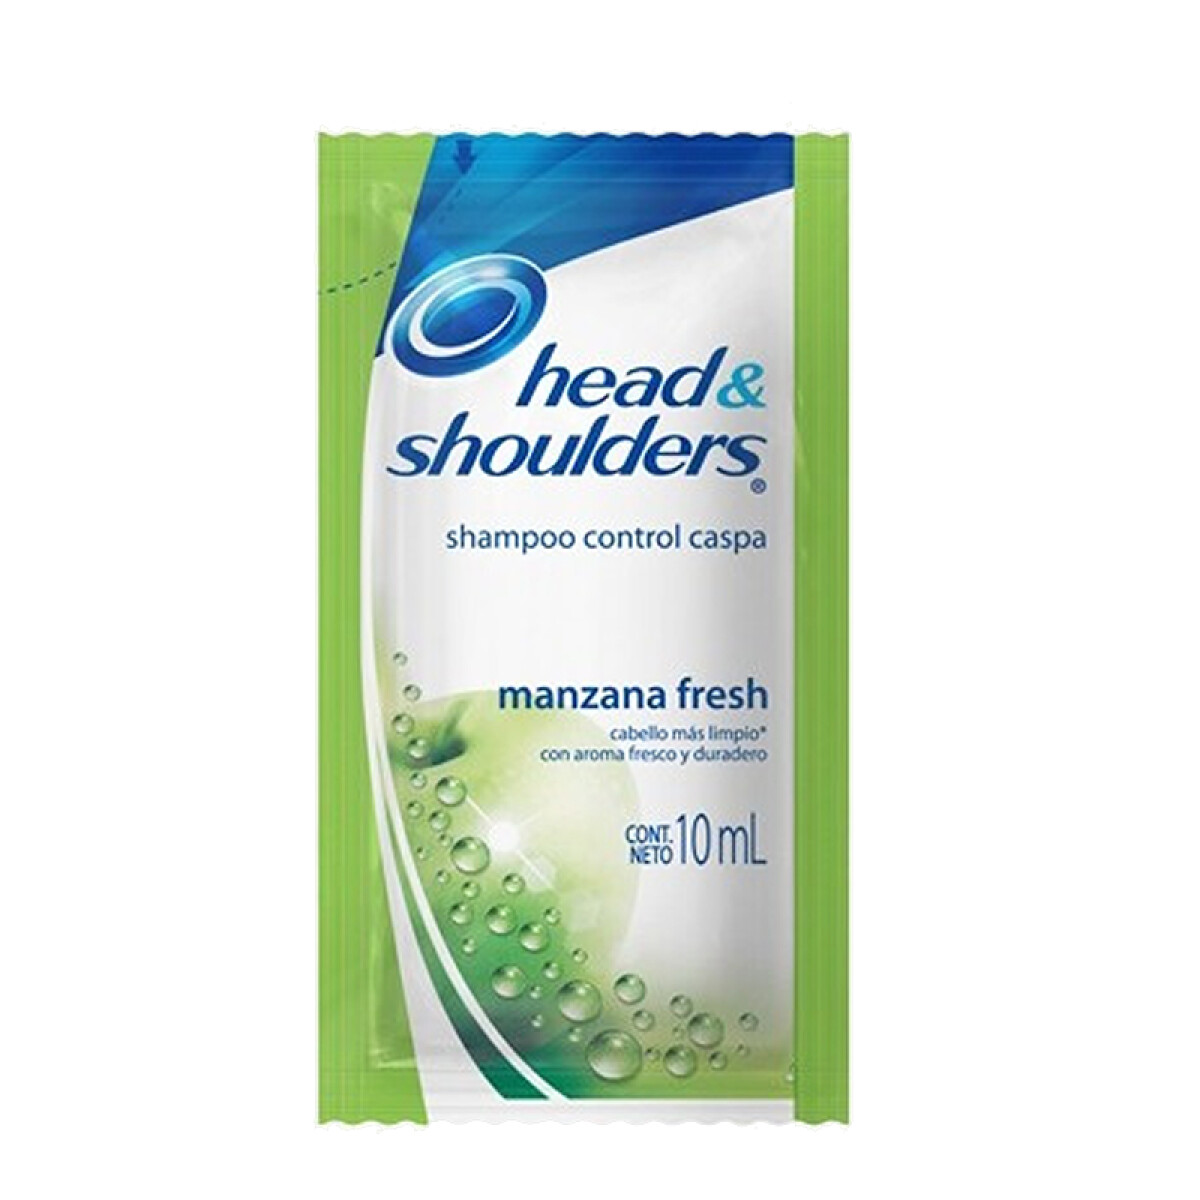 Sachet Shampoo HEAD & SHOULDERS 10ml x24 Unidades - Manzana Fresh 